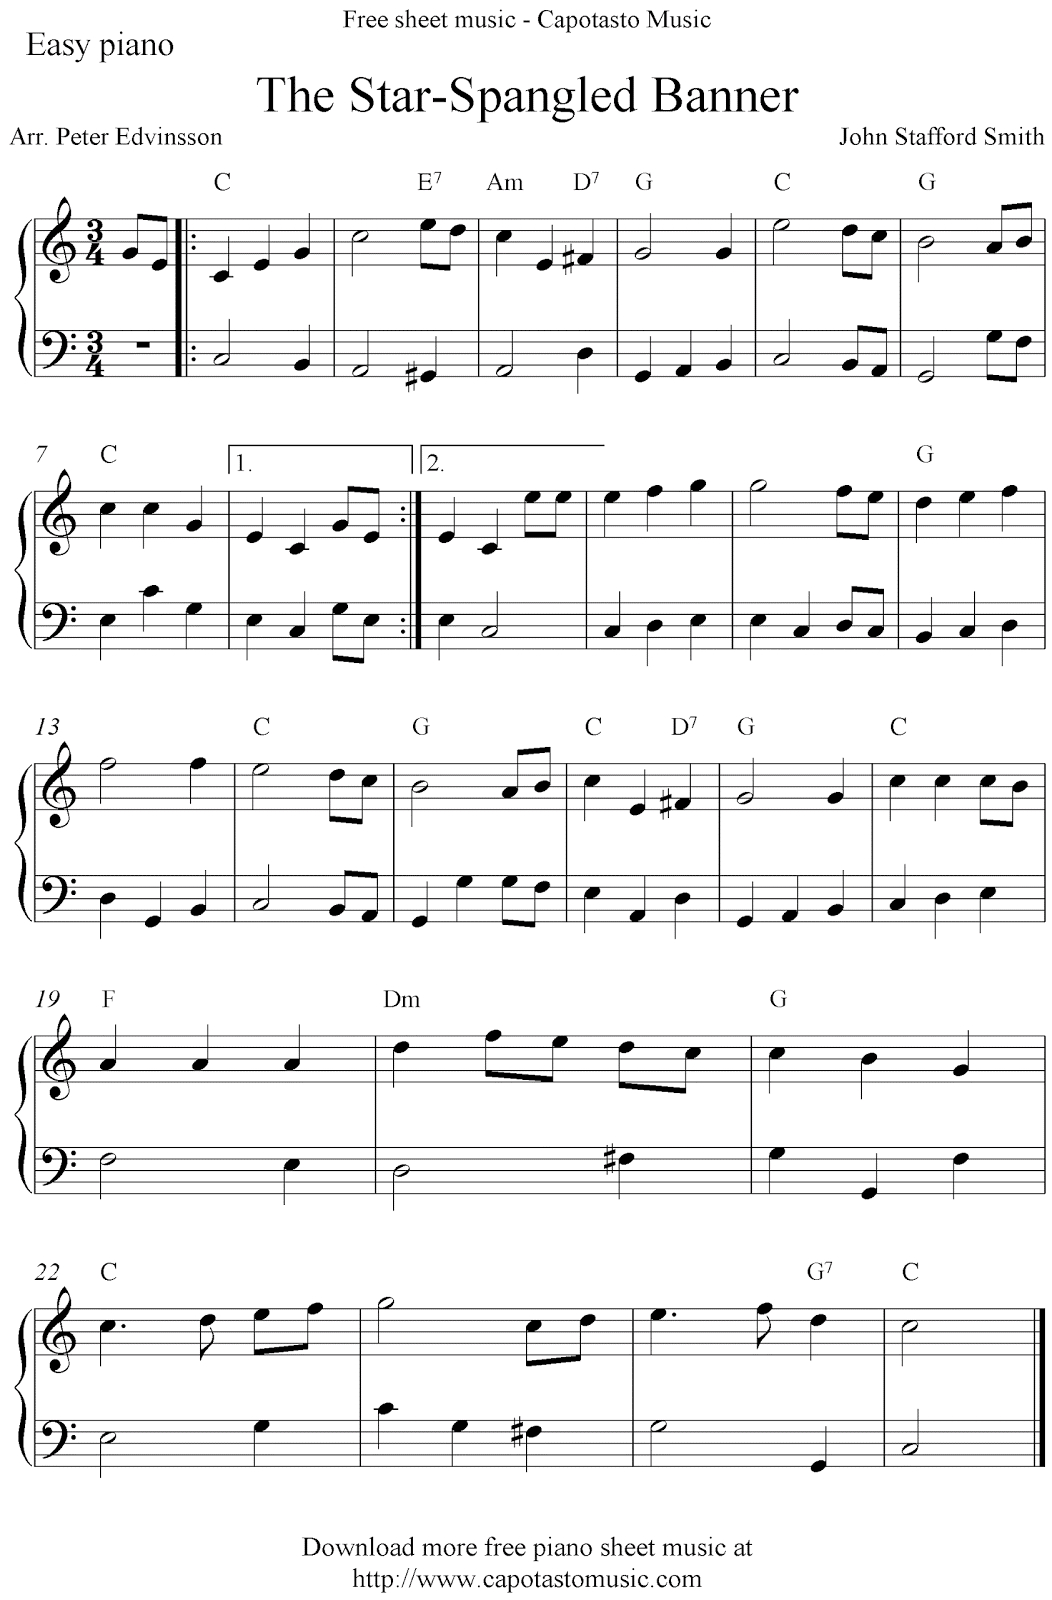 Free Easy Piano Sheet Music Score, The Star-Spangled Banner - Free Printable Piano Sheet Music For The Star Spangled Banner